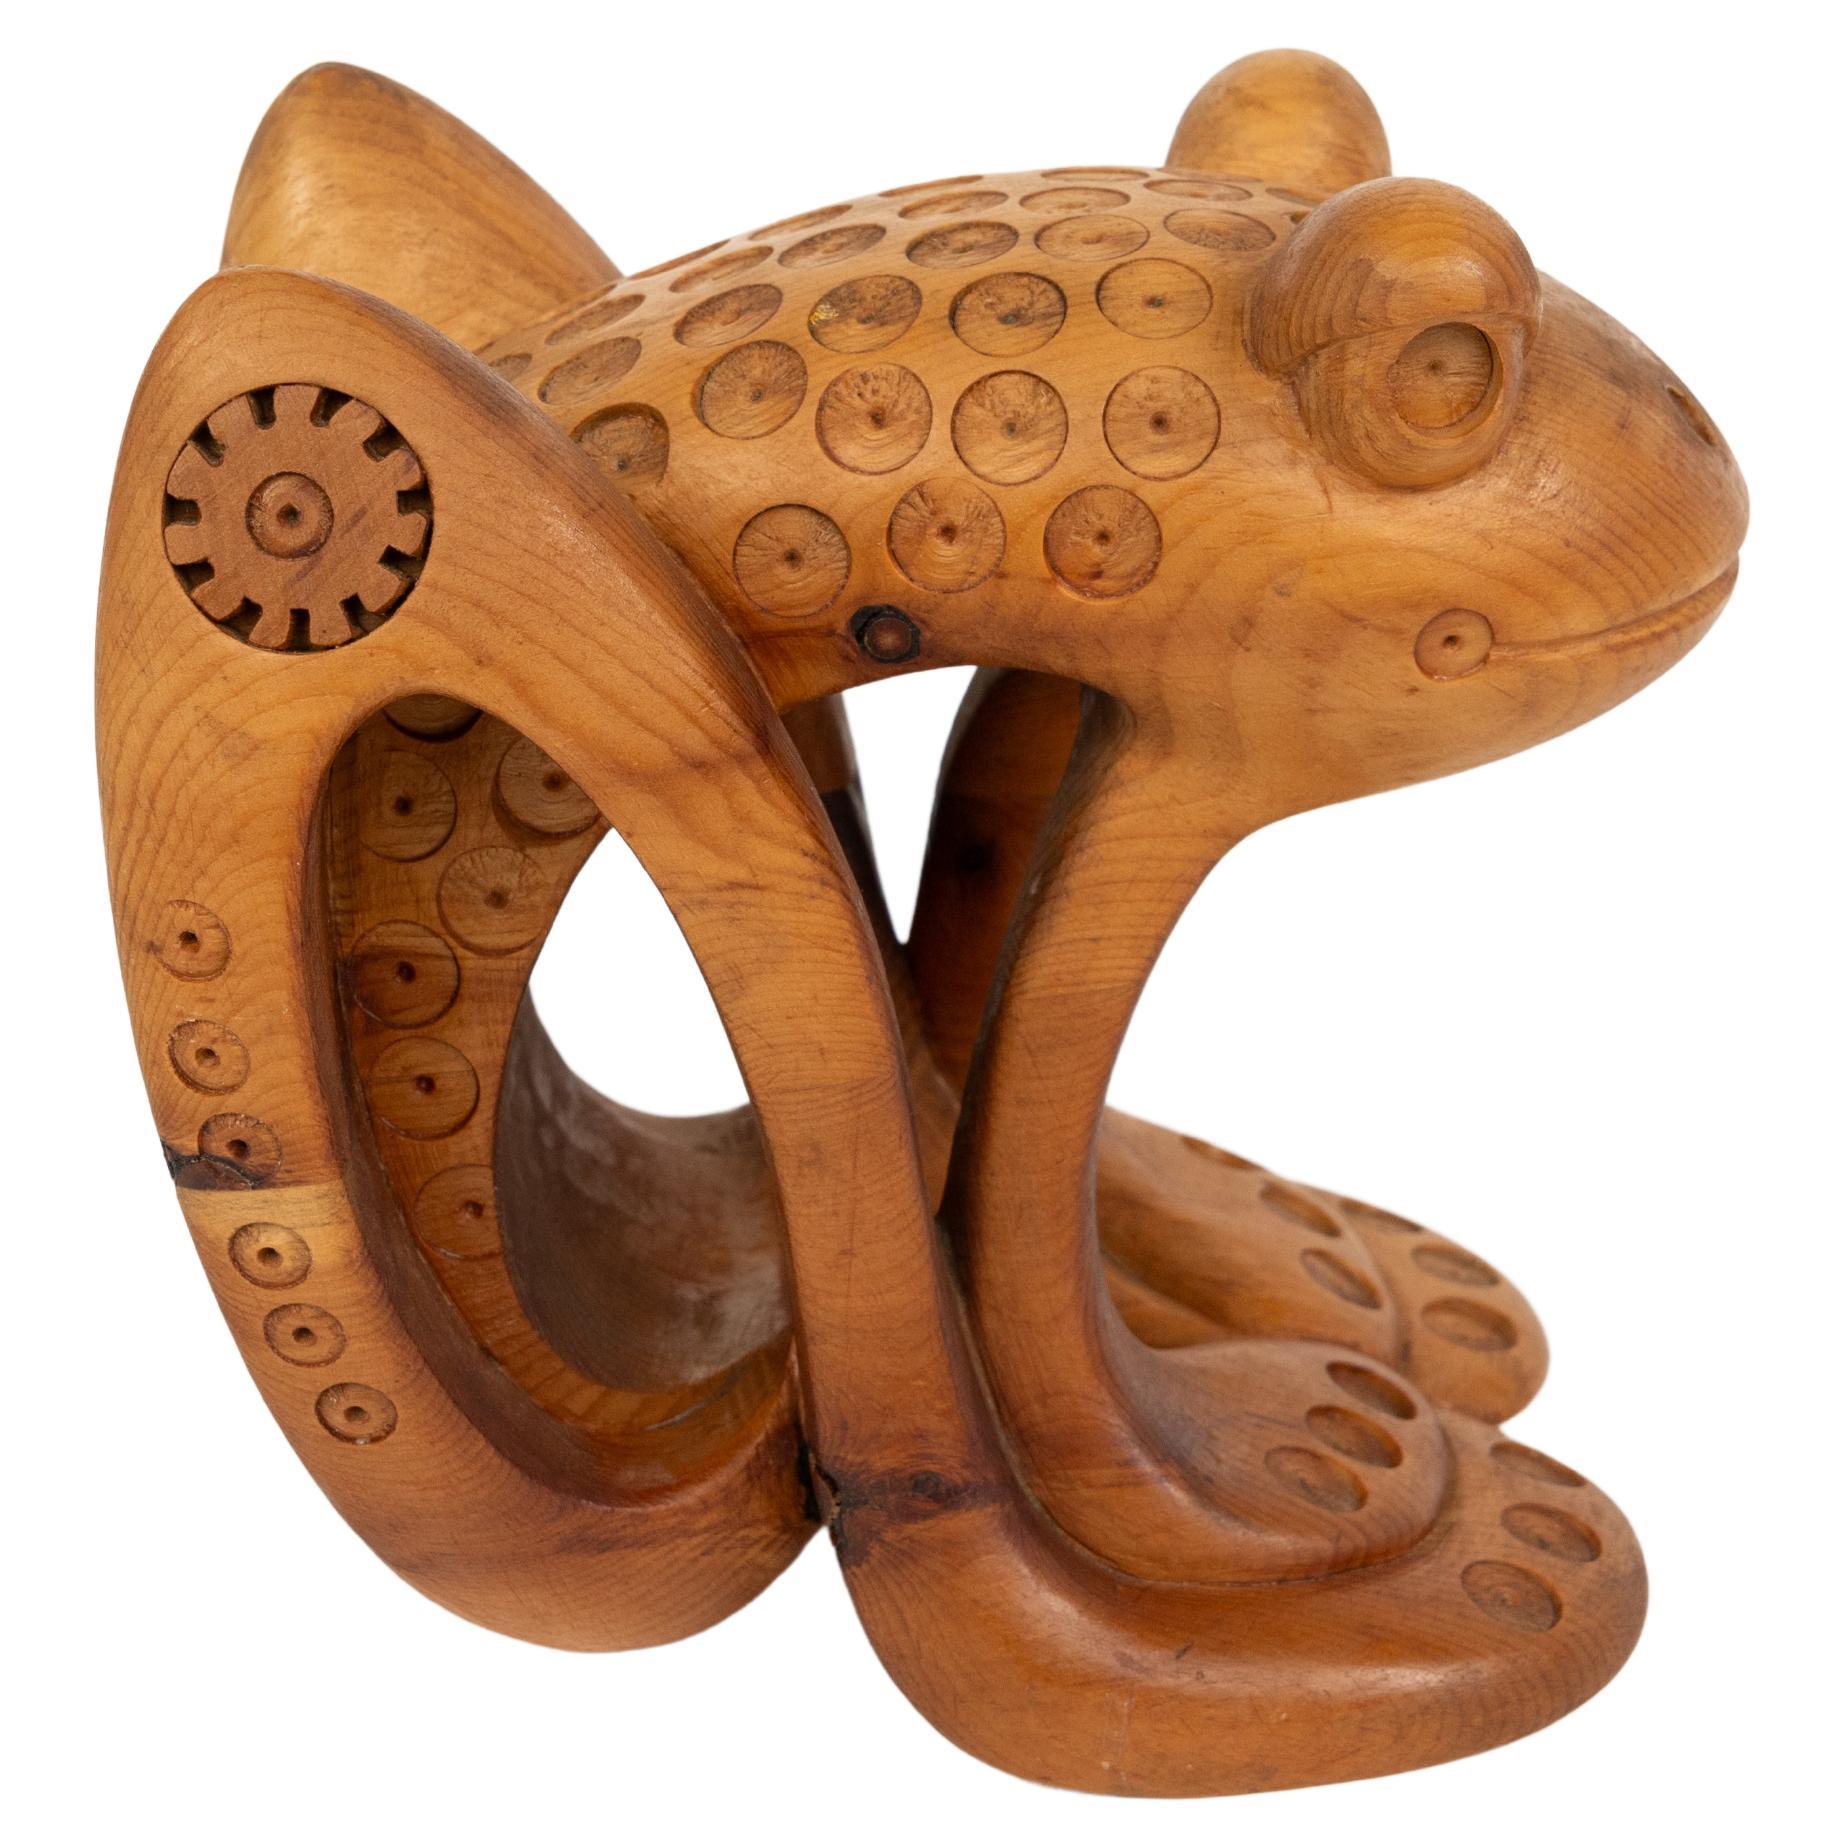 Pine Wood Decorative Sculpture Shape Frog by Ferdinando Codognotto, Italy 2001